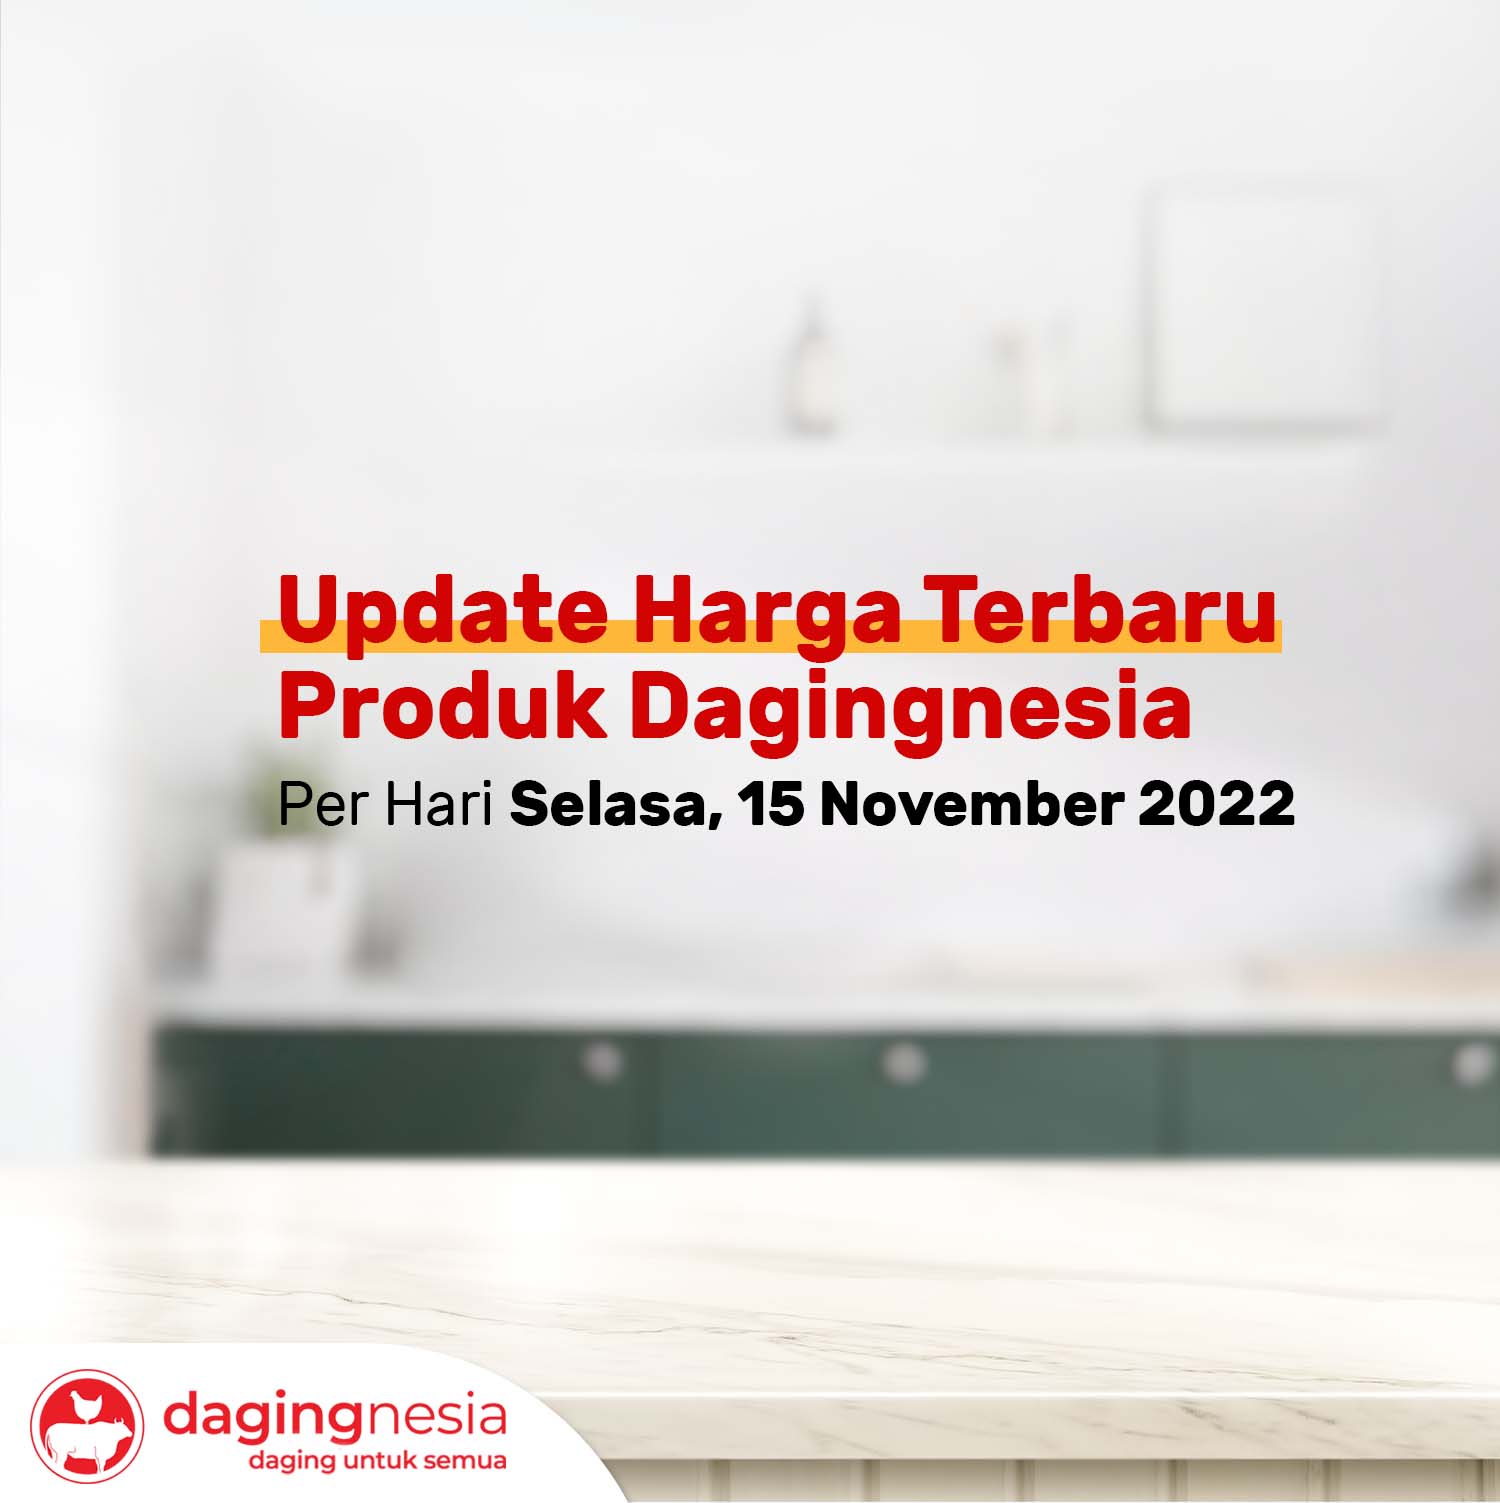 Update Pricelist Dagingnesia – 15 November 2022